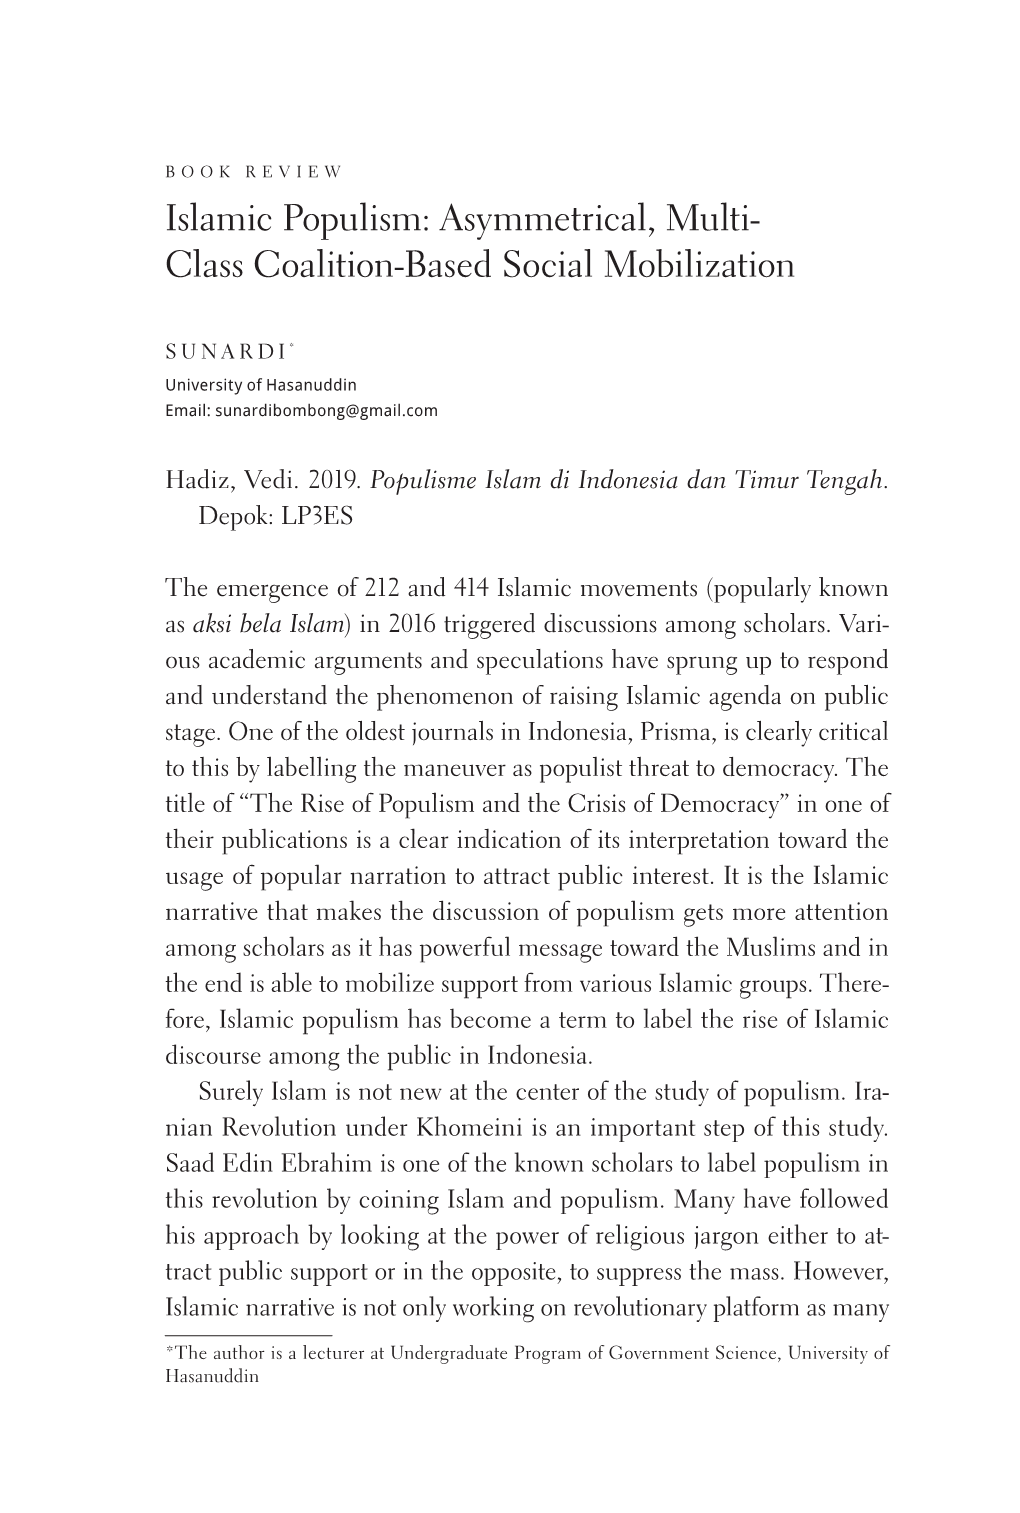 Islamic Populism: Asymmetrical, Multi- Class Coalition-Based Social Mobilization